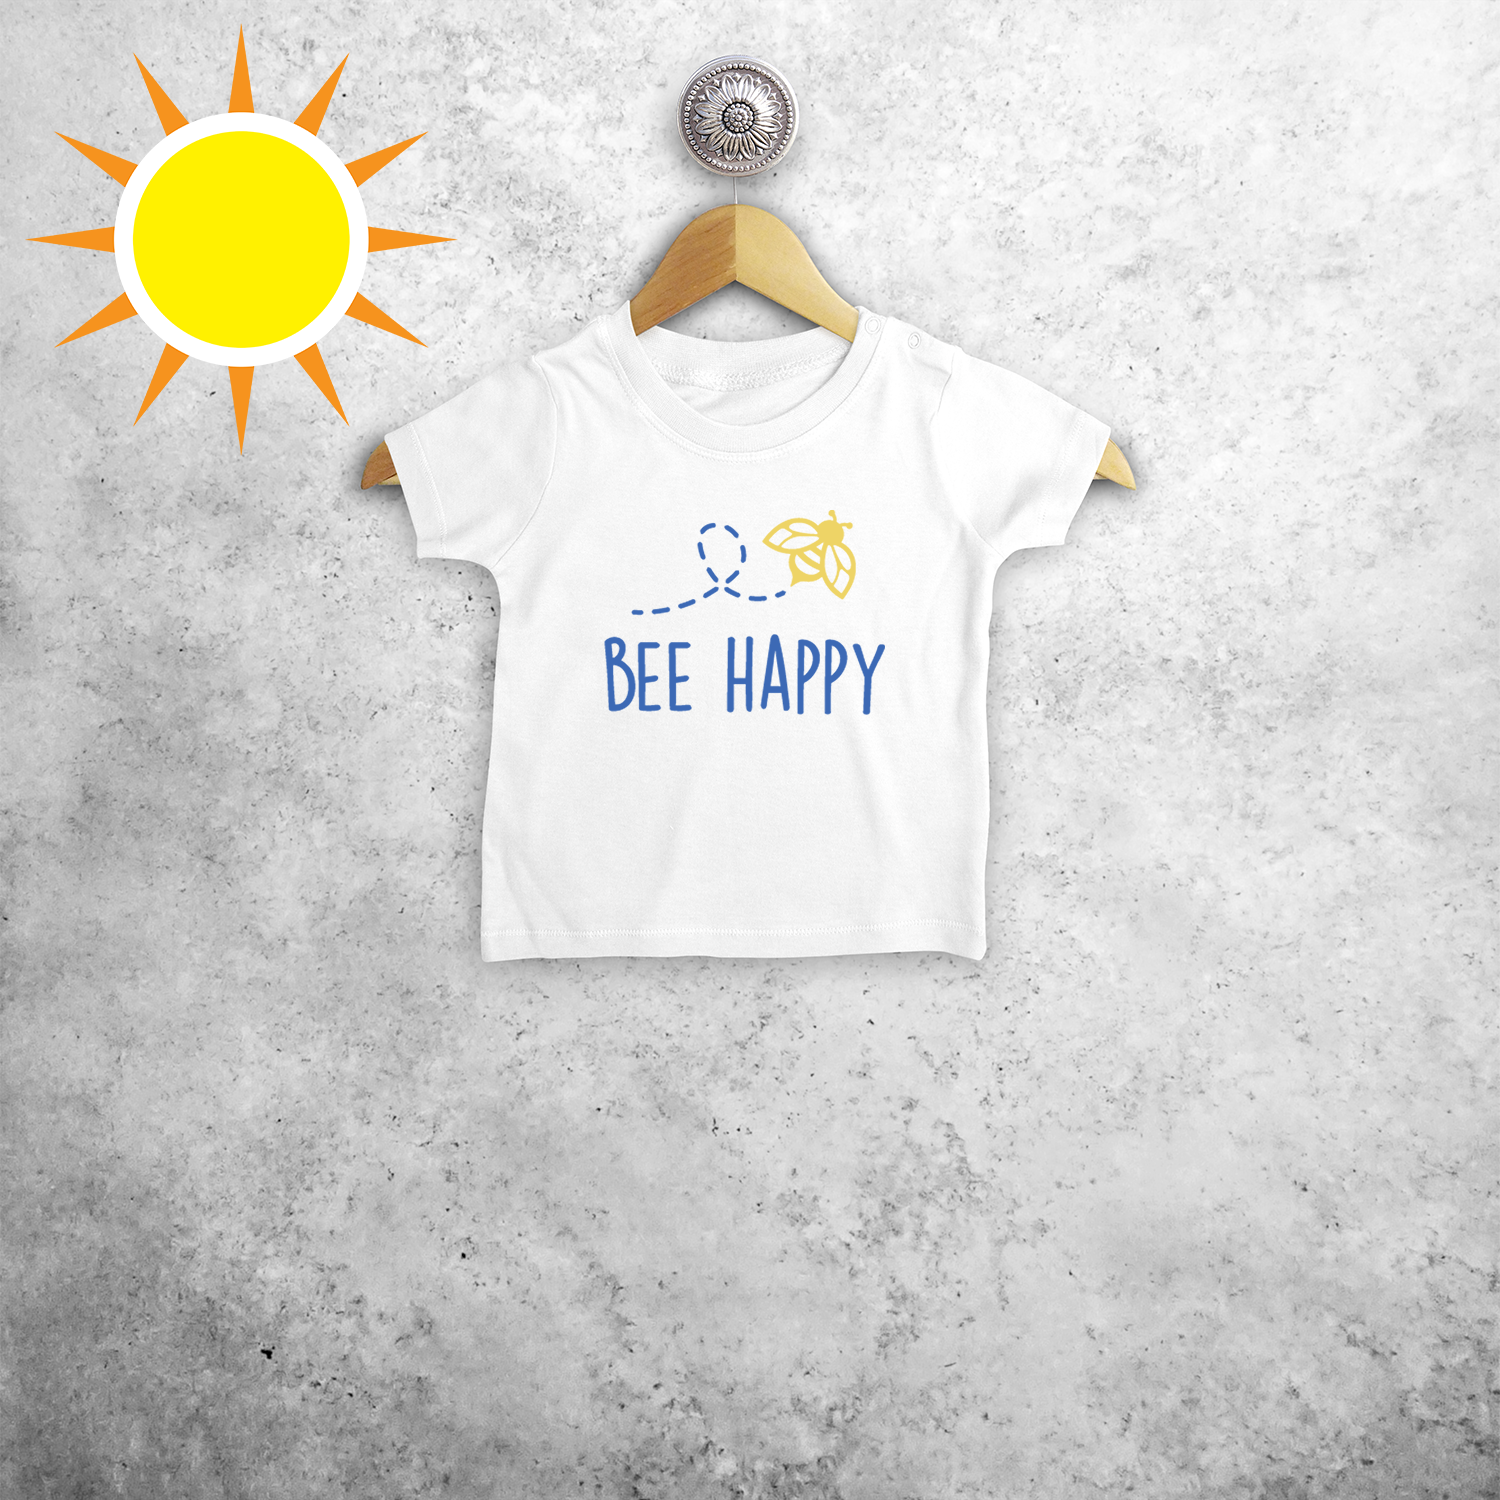 'Bee happy' magic baby shortsleeve shirt